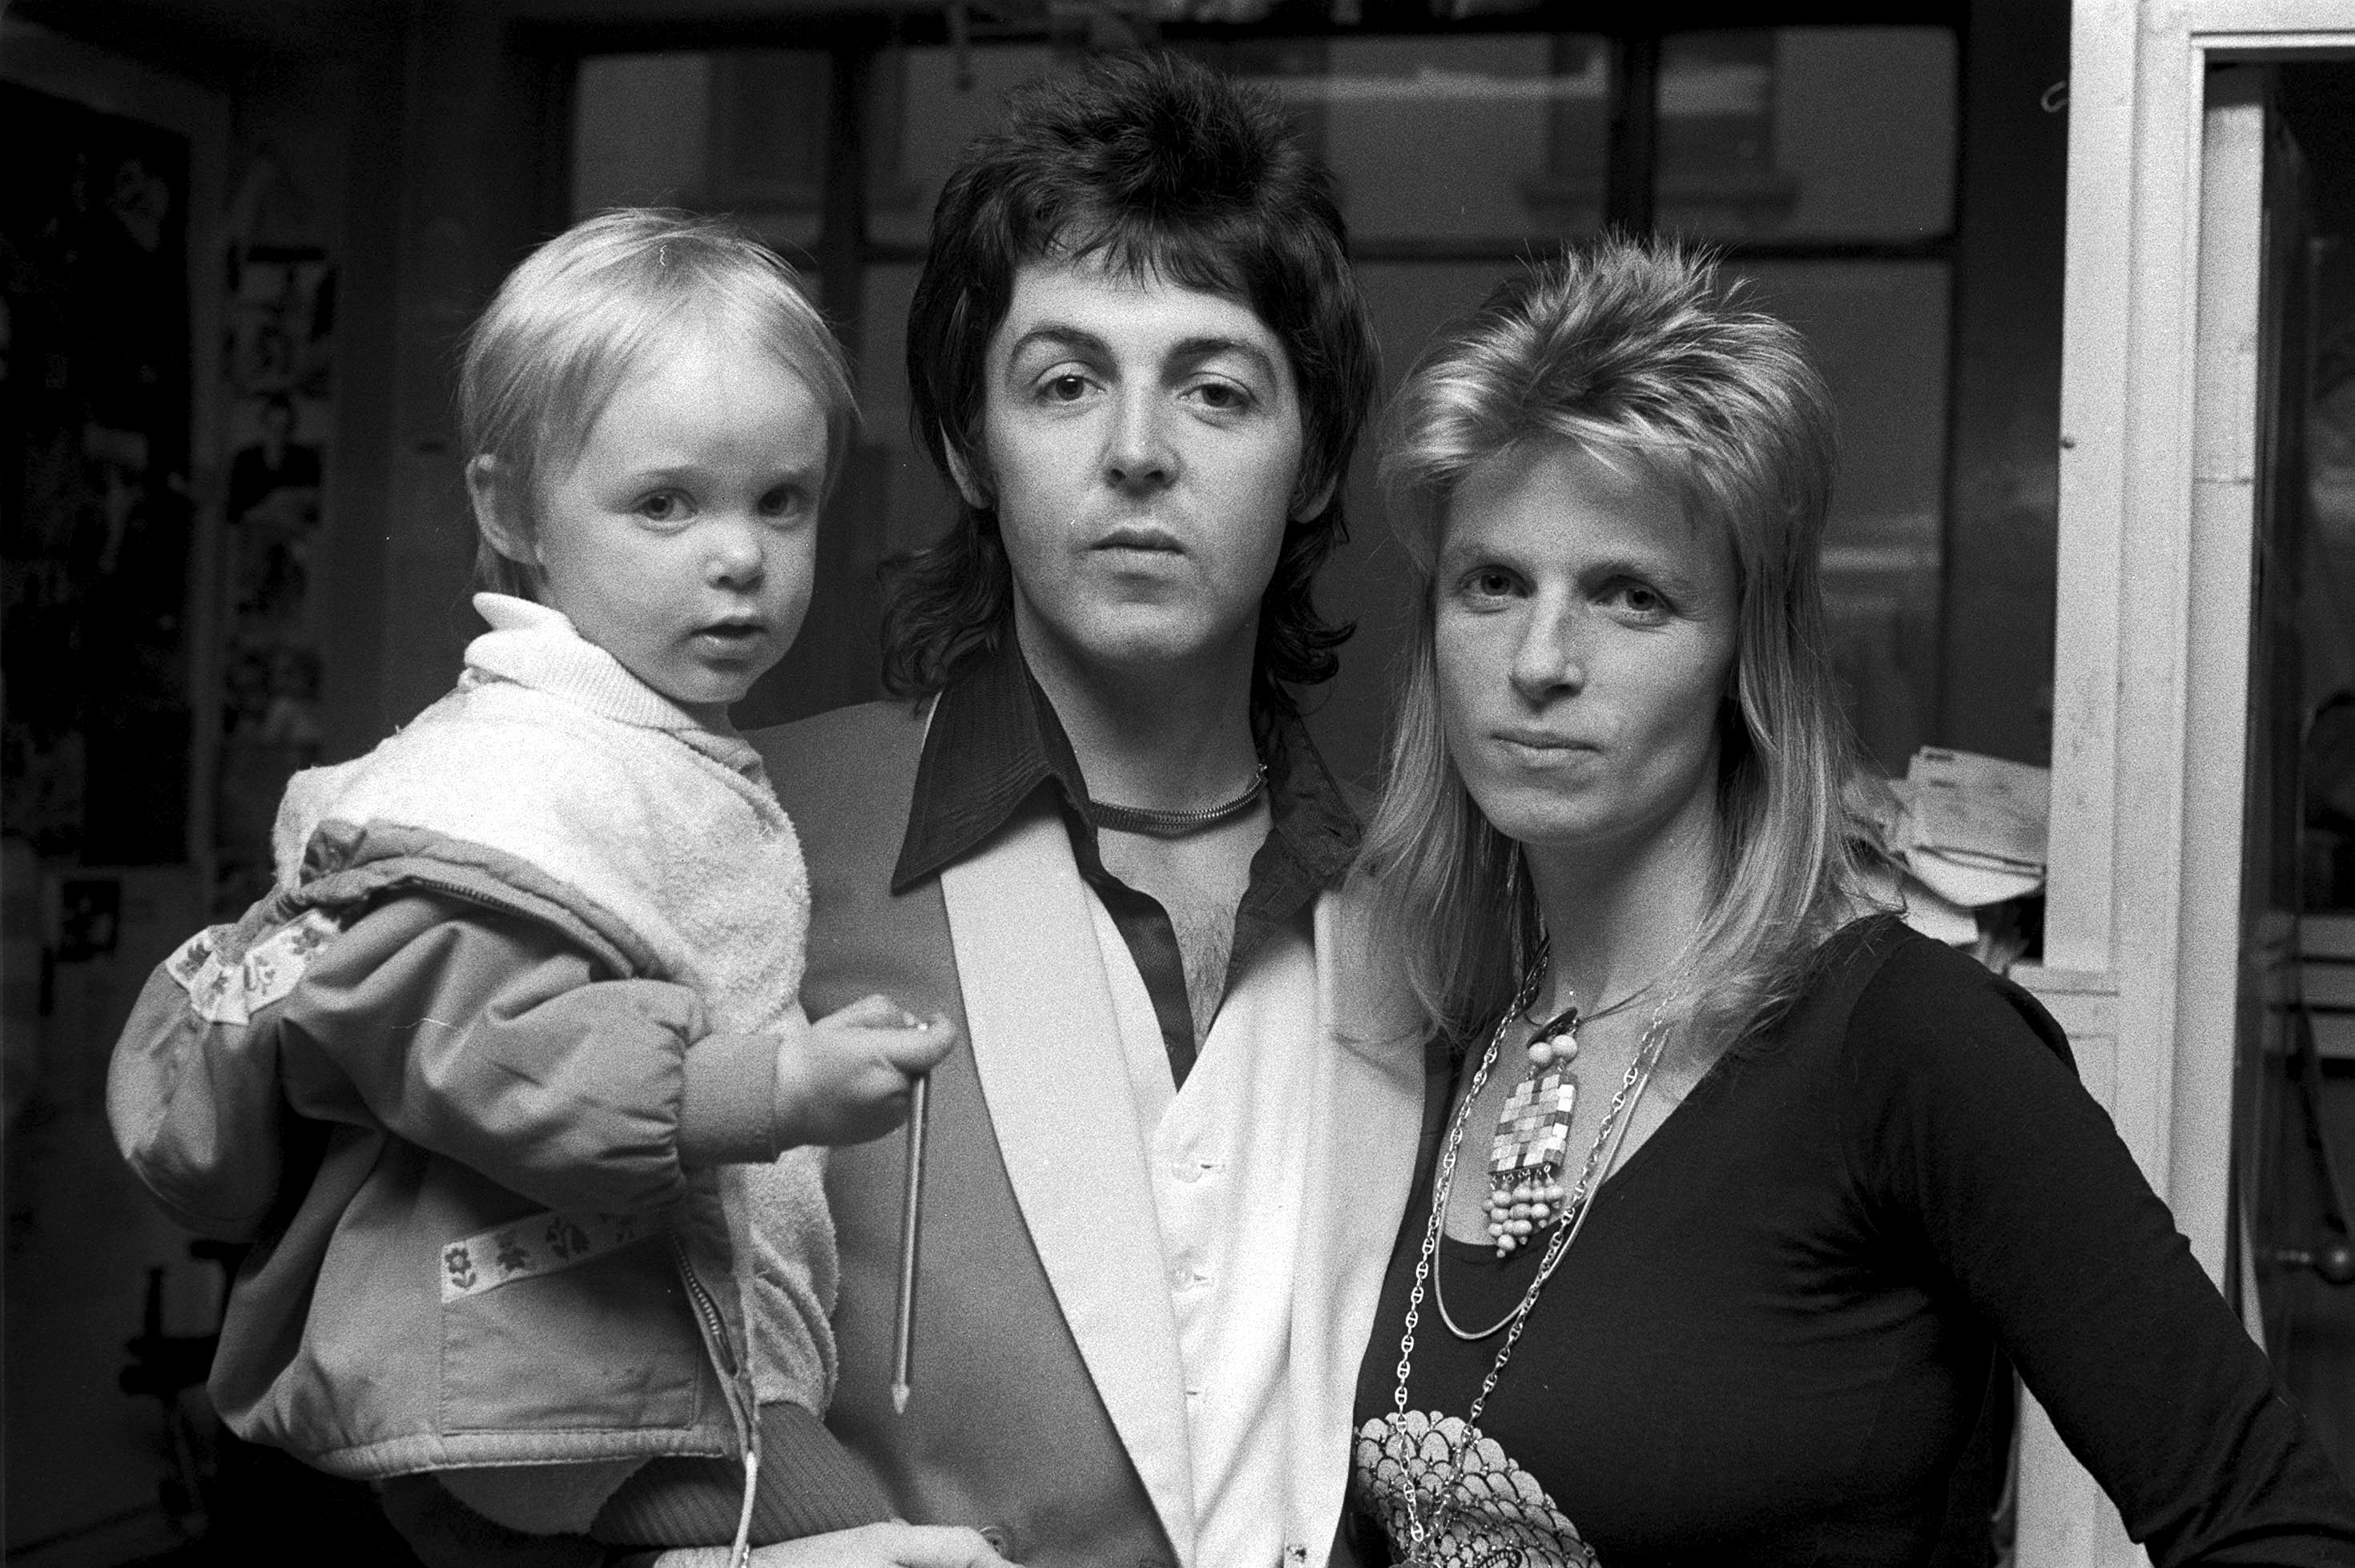 Stella McCartney, Paul McCartney, and Linda McCartney in black-and-white